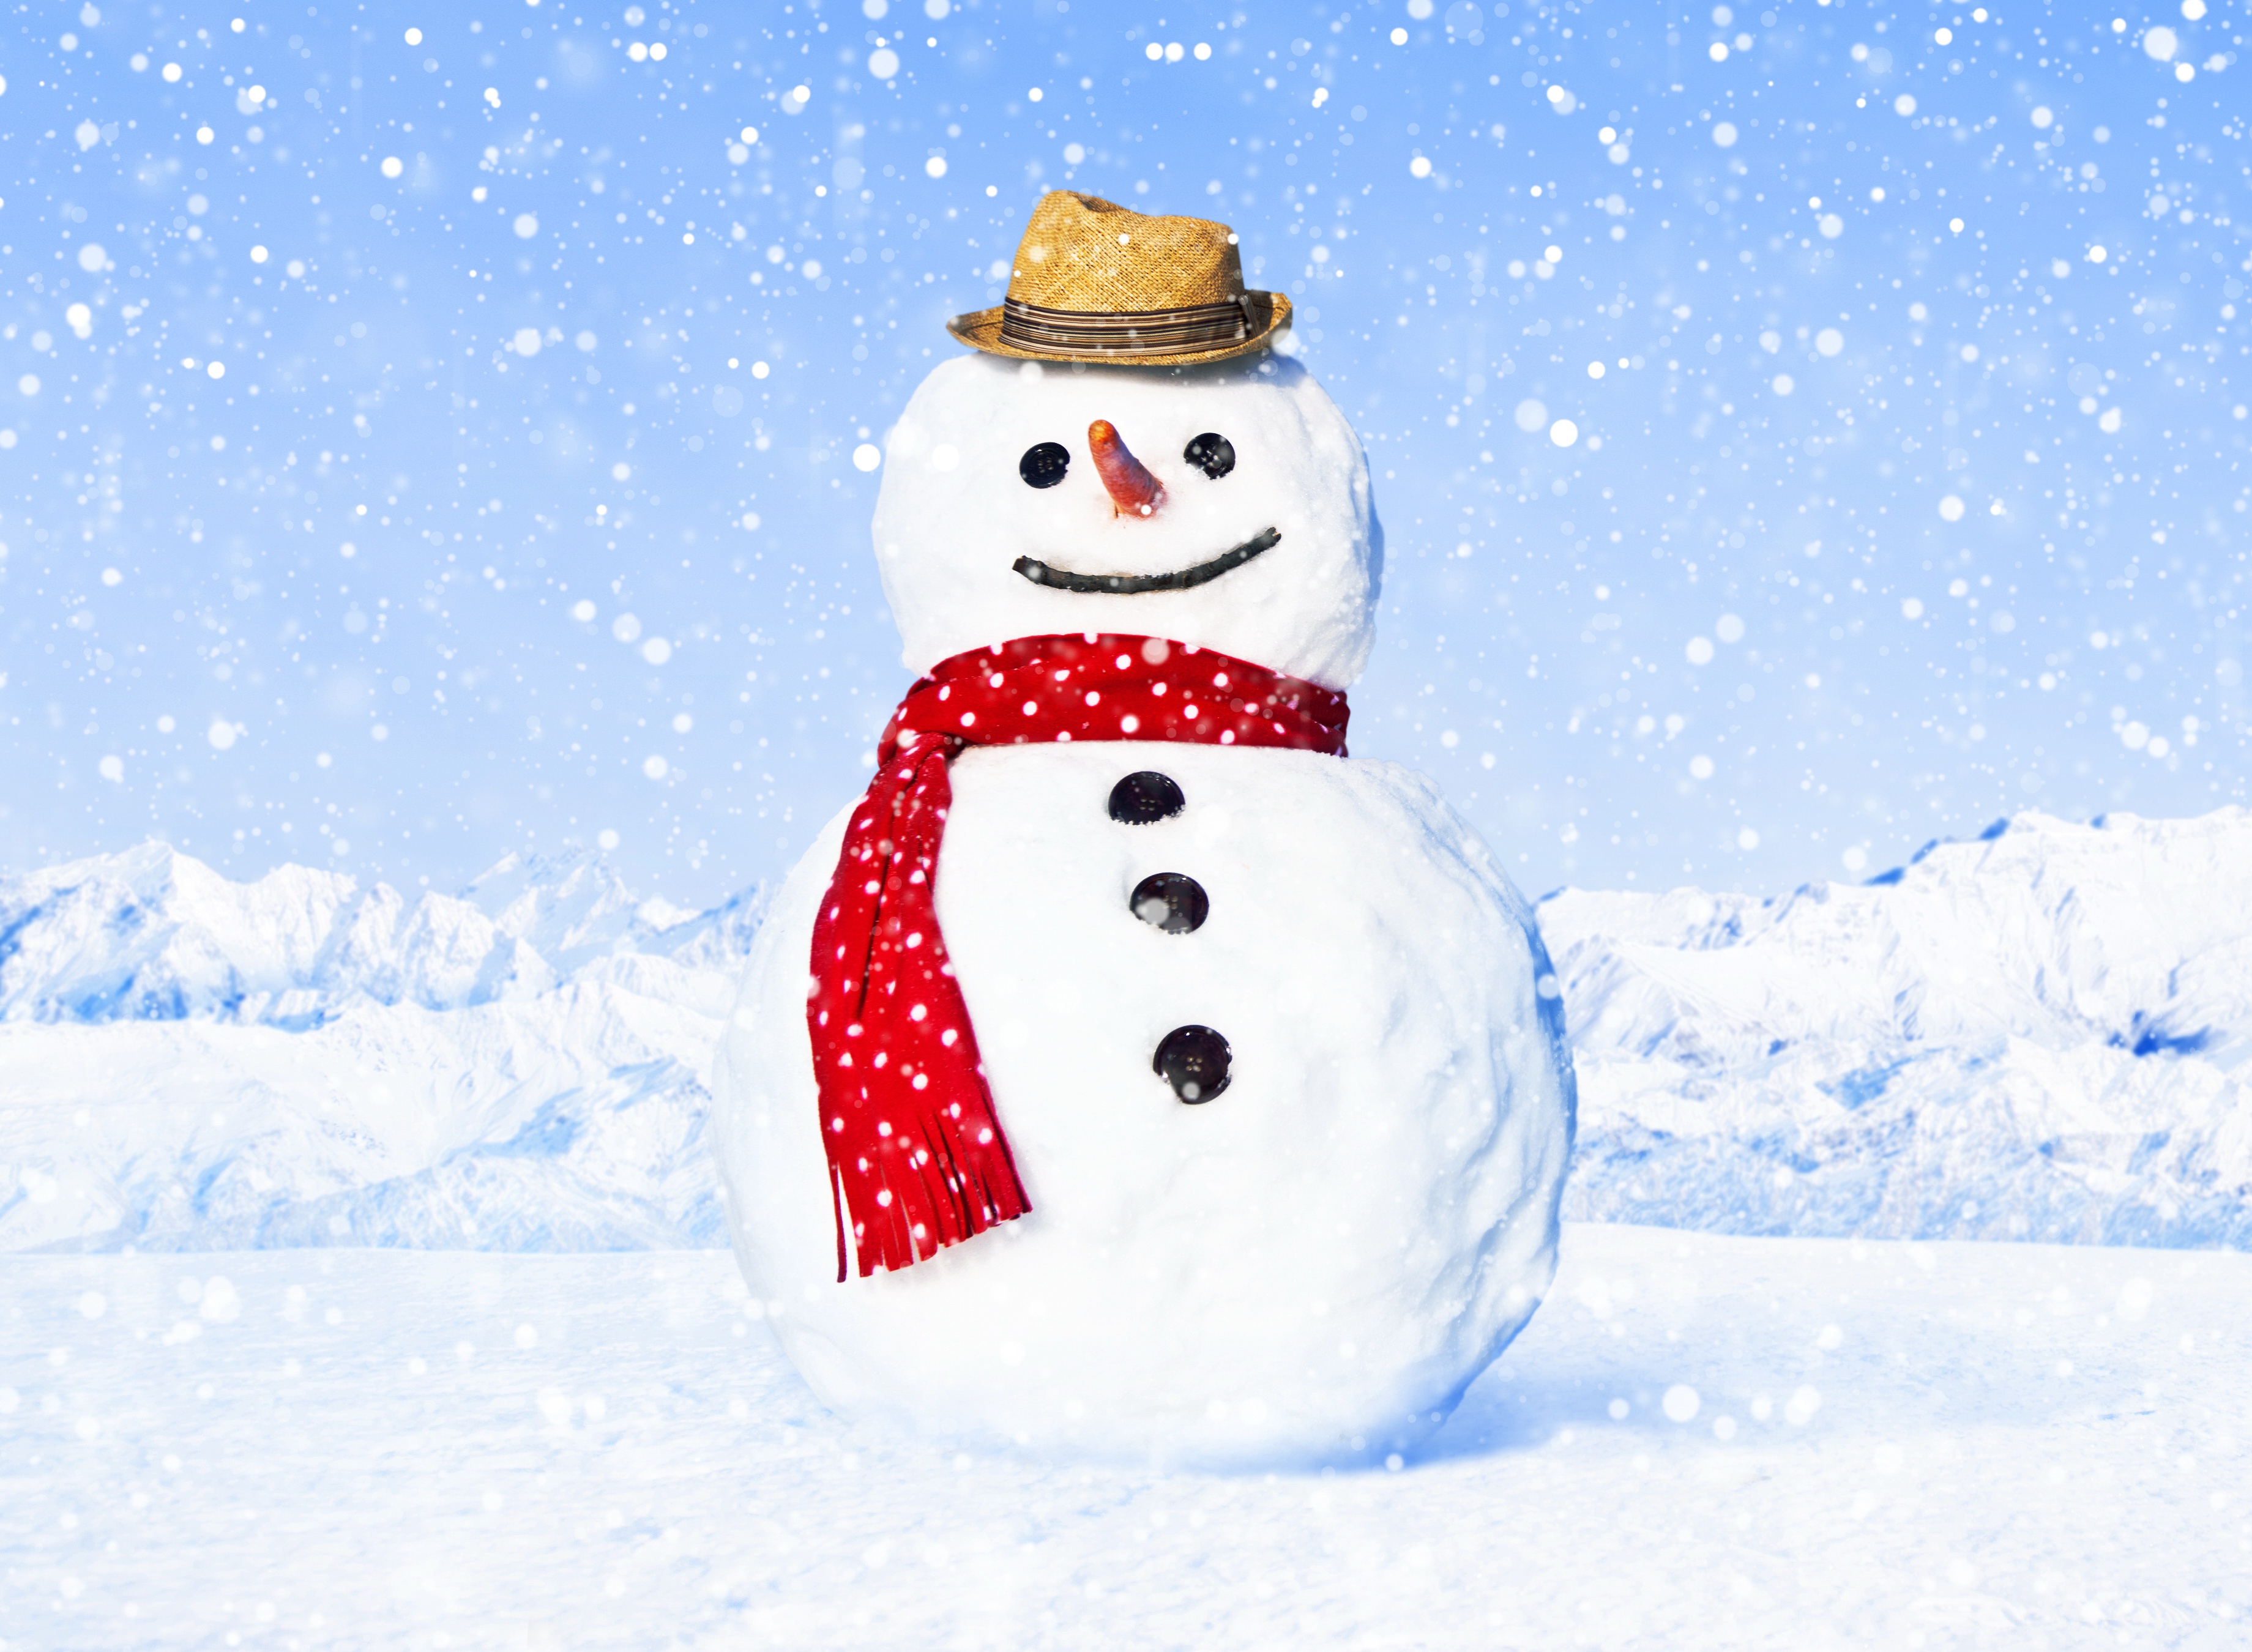 Snowman HD Wallpaper Background Image 3680x2700 ID1057910.